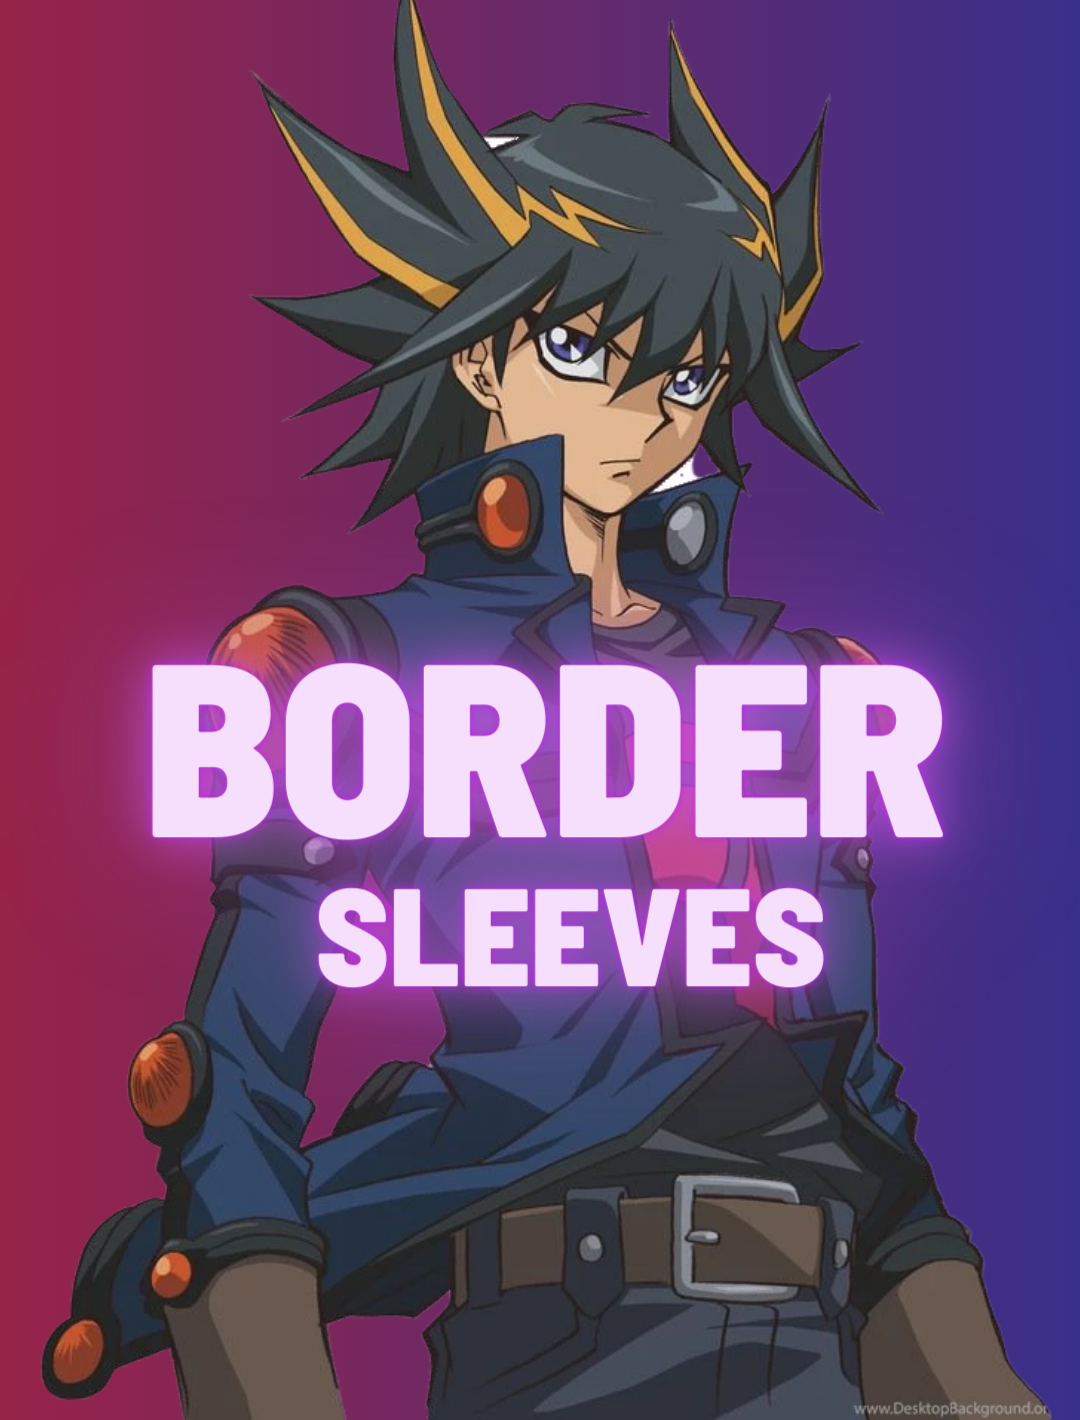 Border sleeves